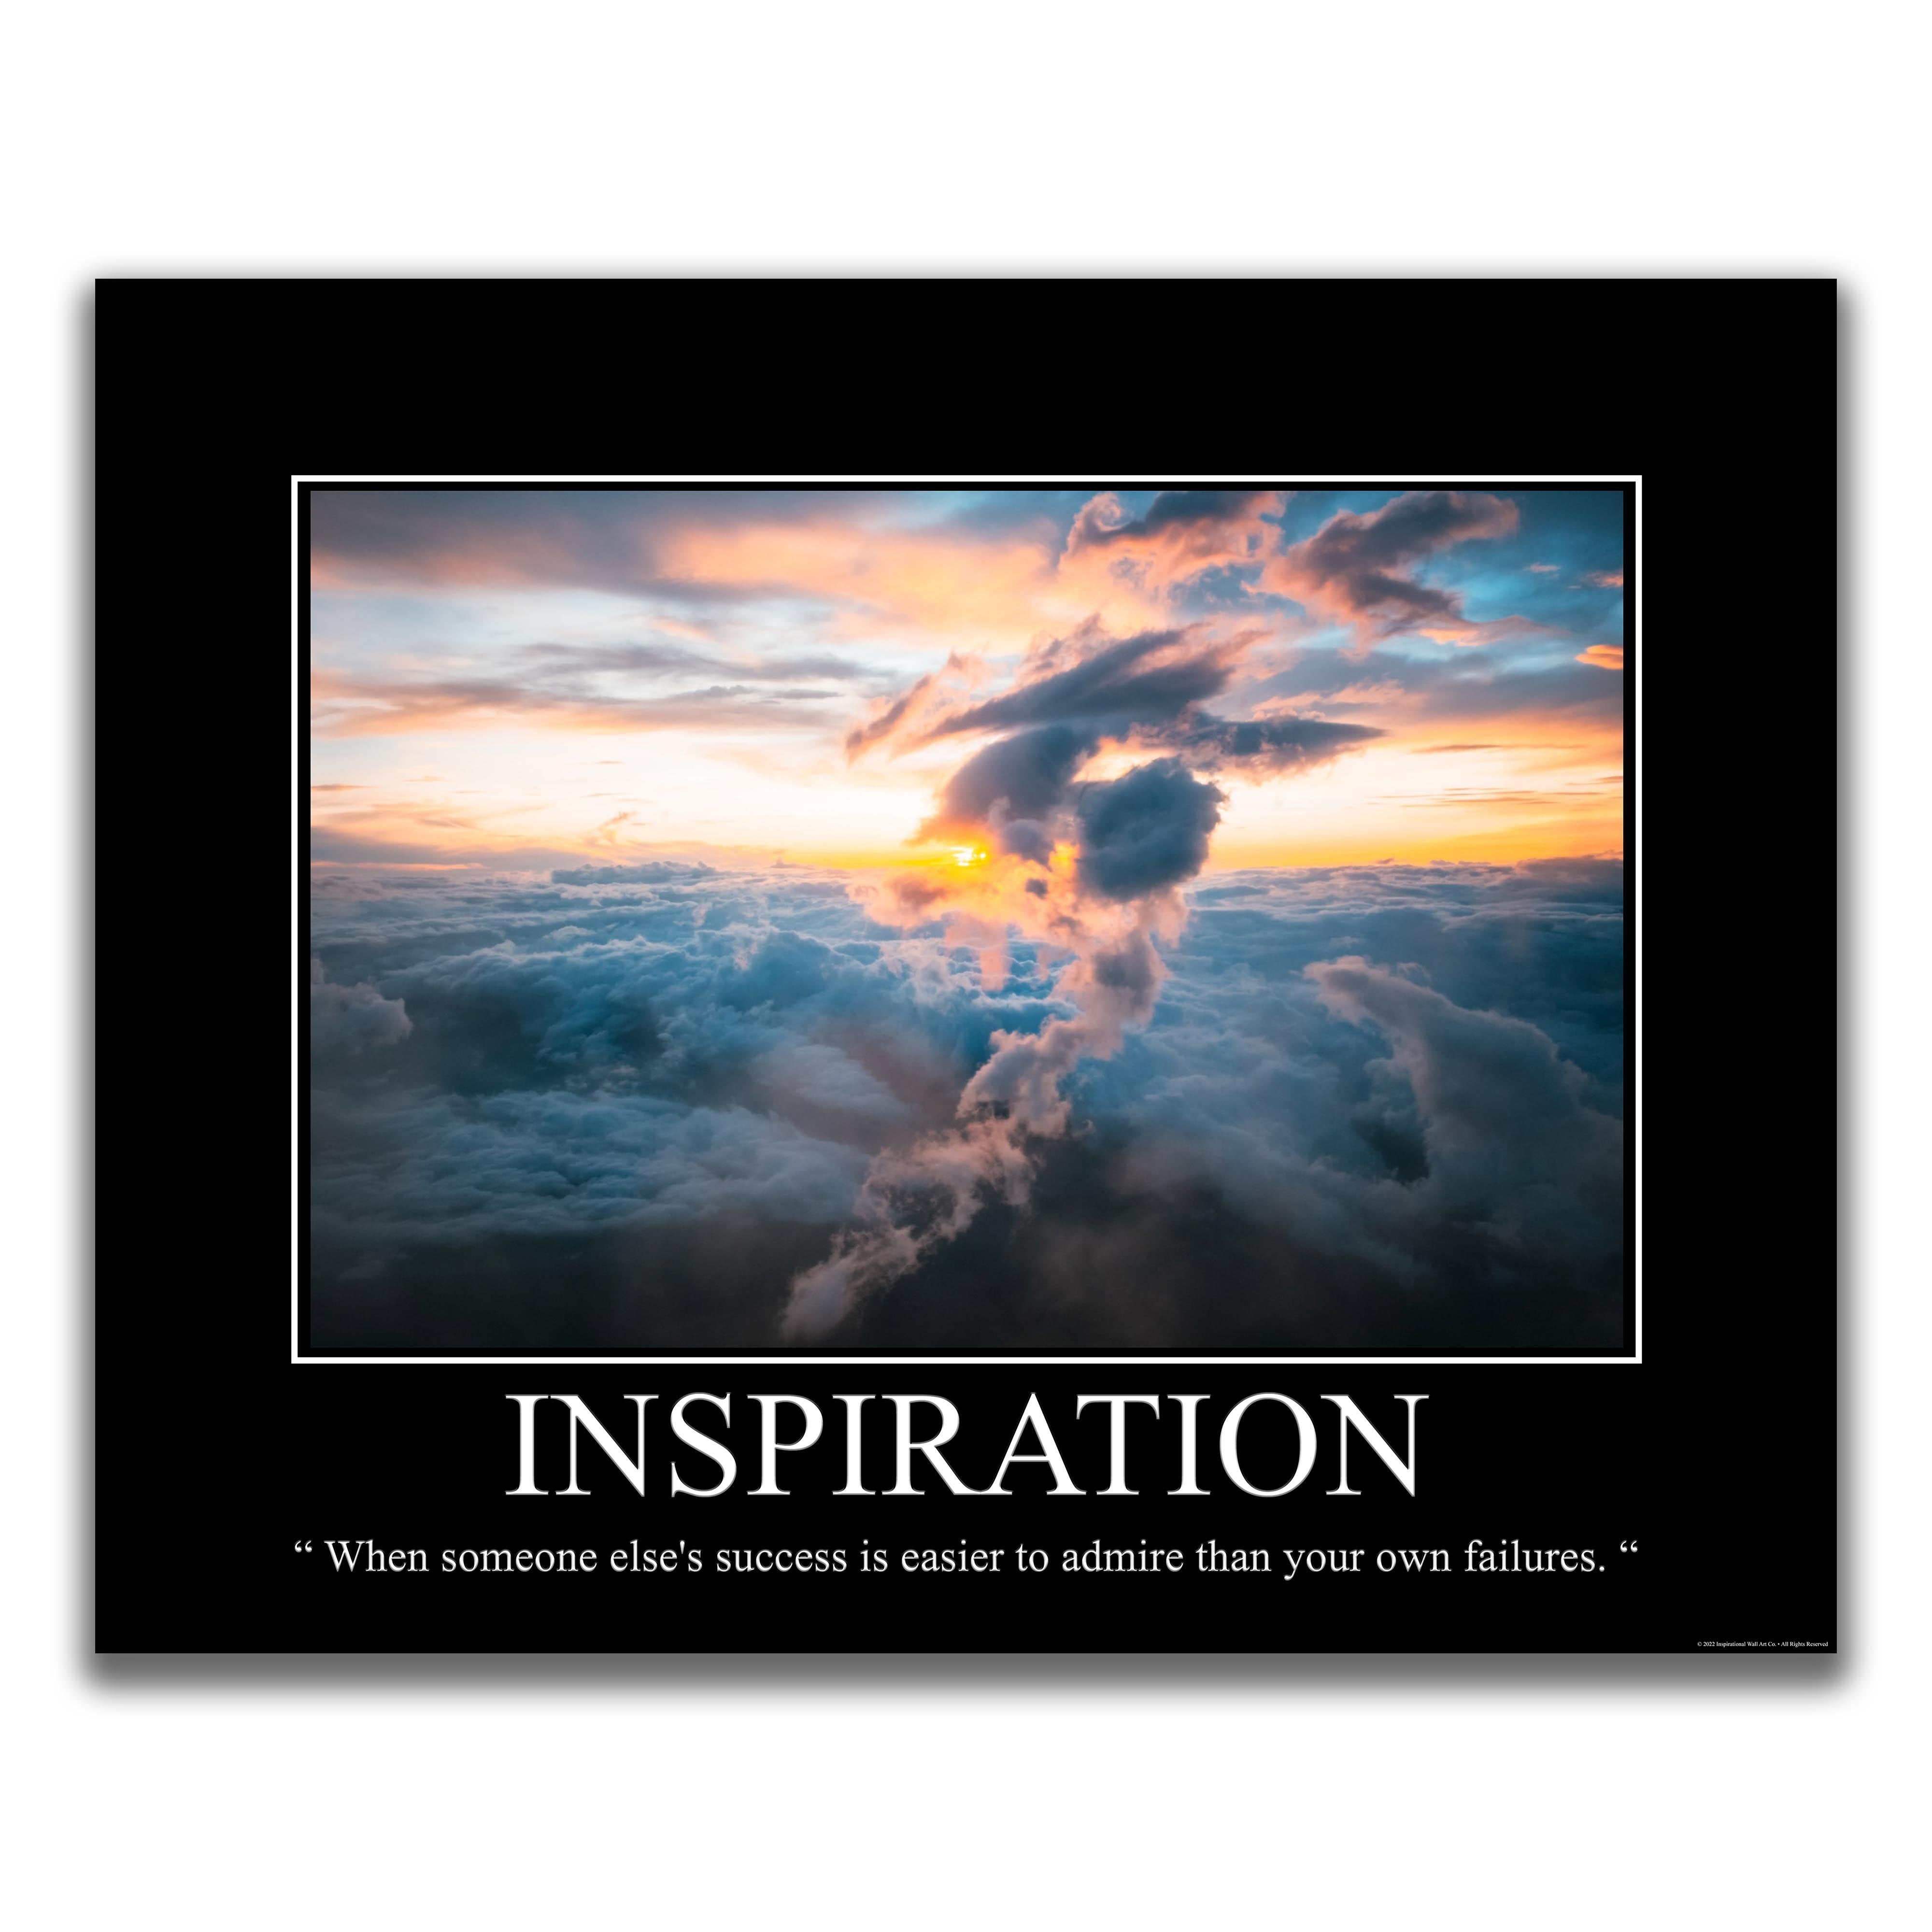 Inspiration - Demotivational Poster